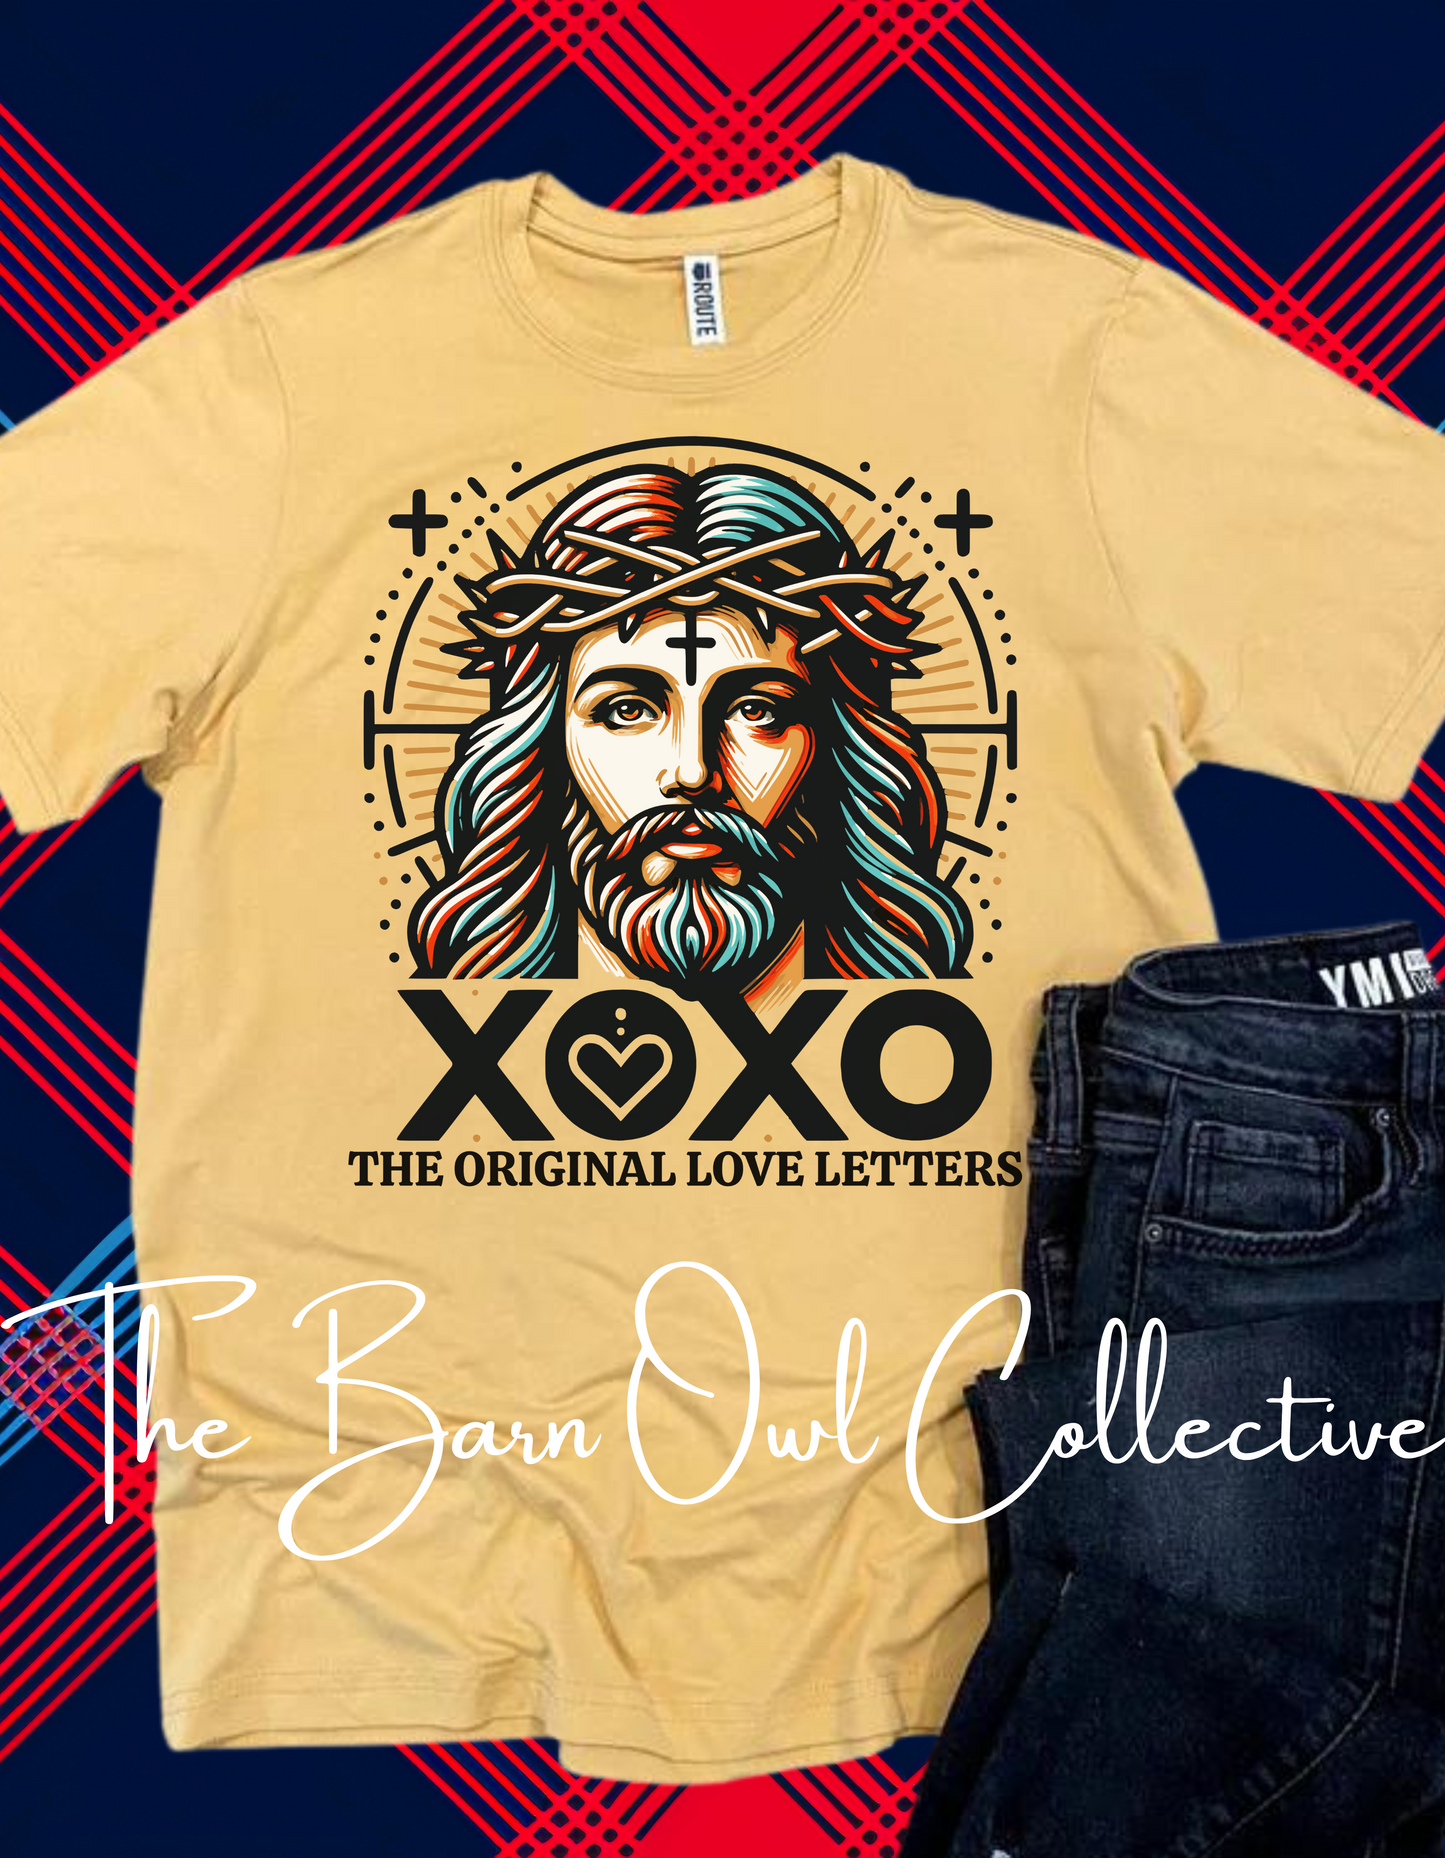 XOXO The Original Love Letters T-Shirt